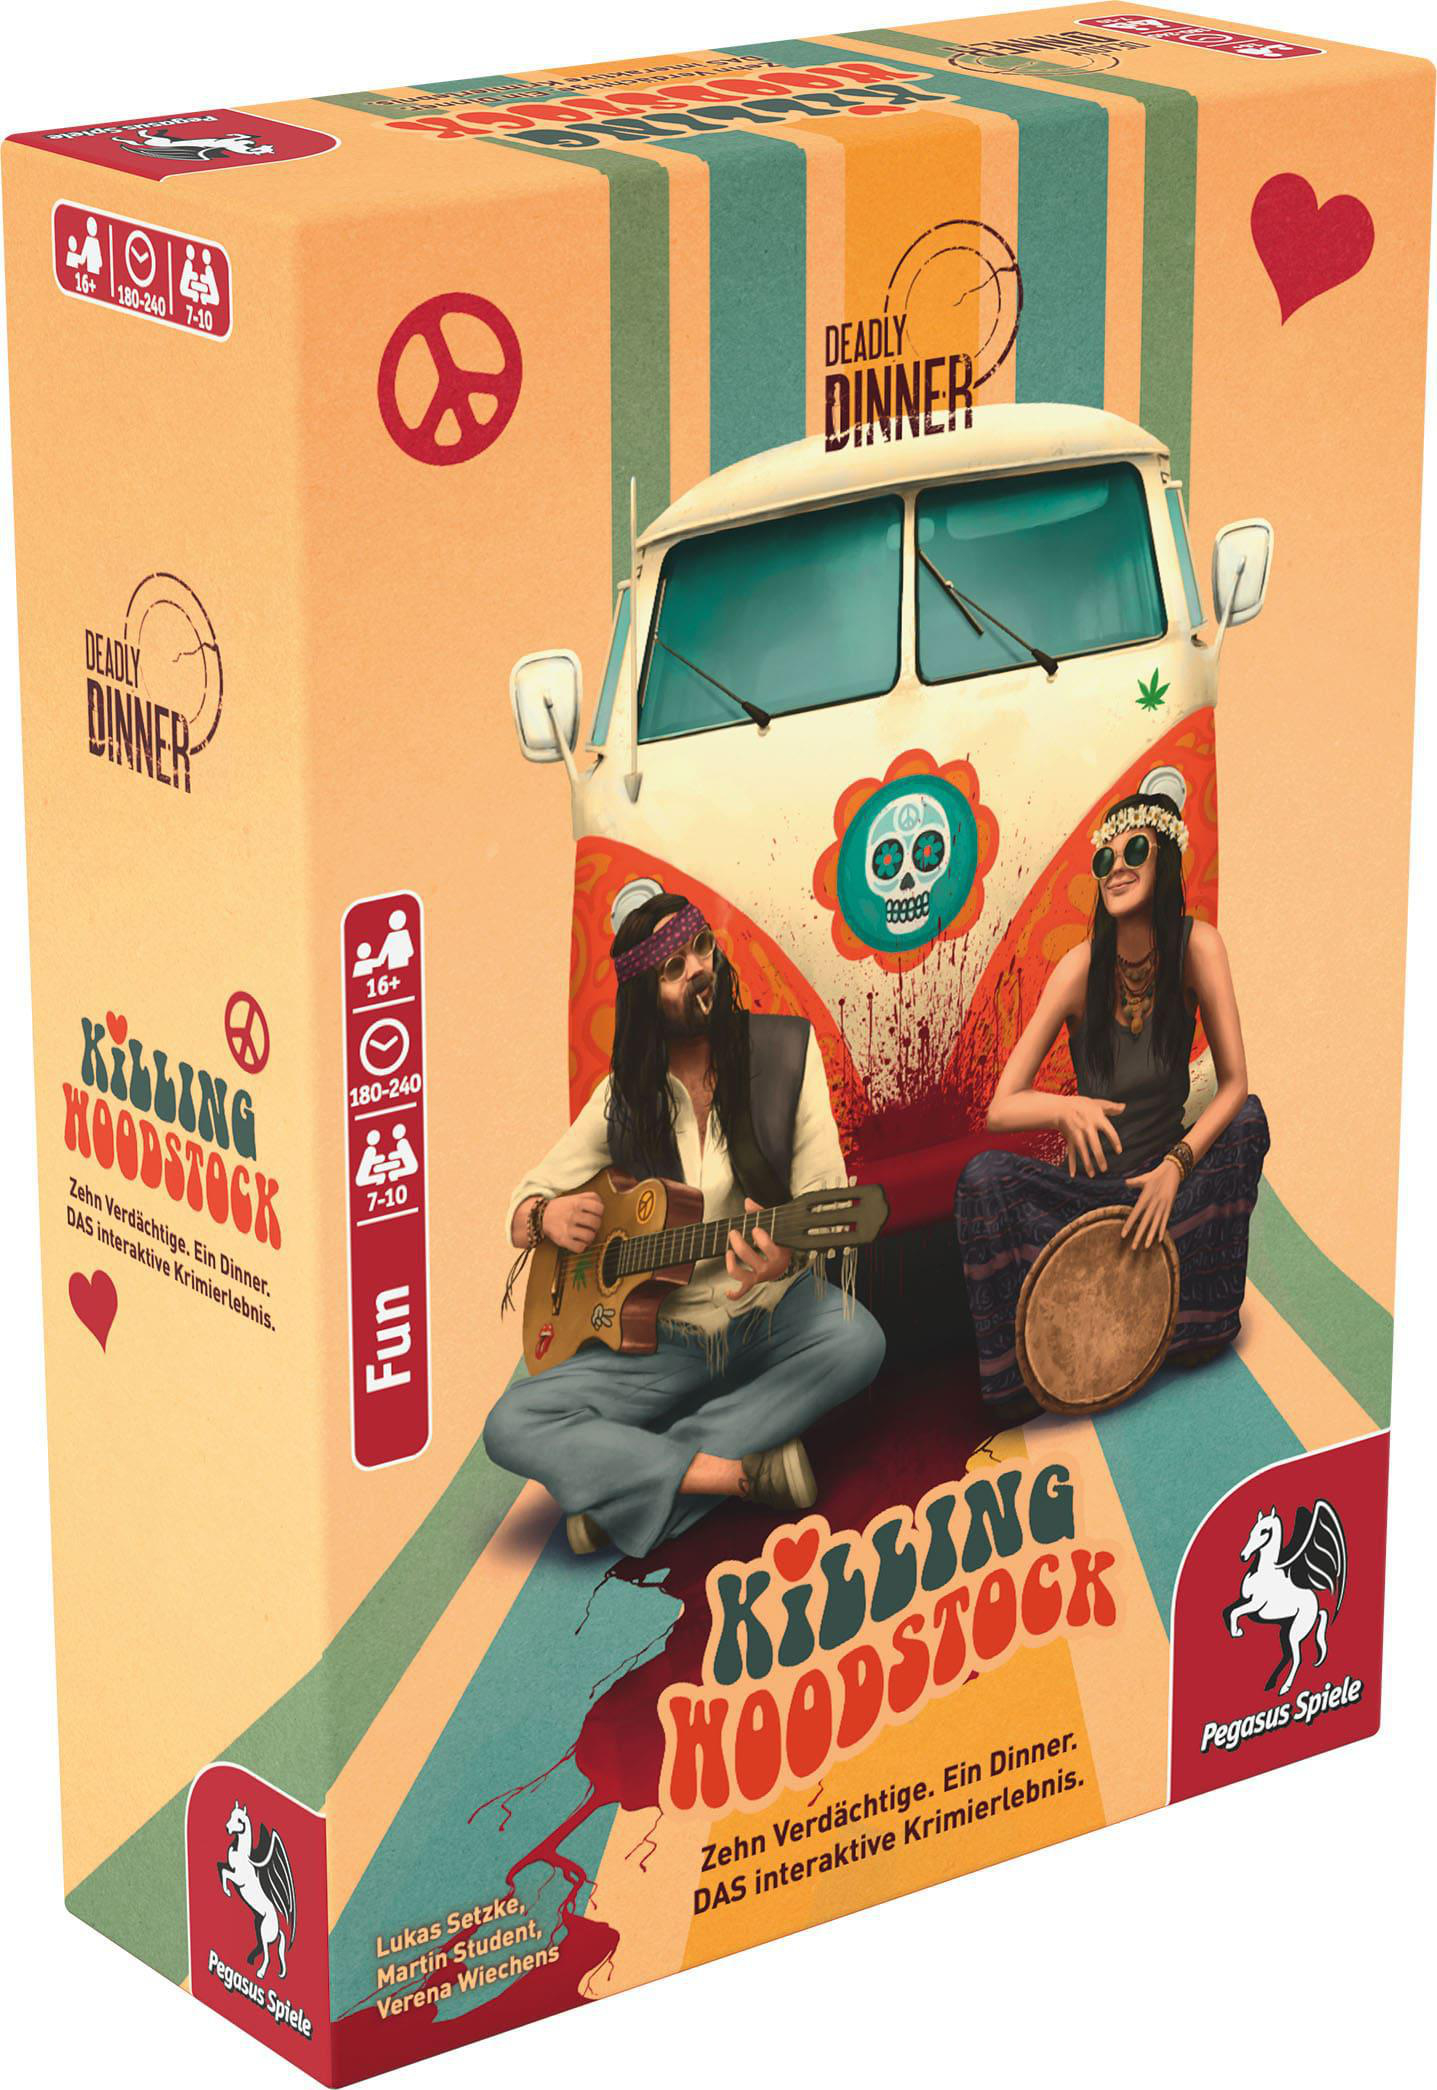 PEGASUS SPIELE Deadly Dinner Denkspiel Killing Woodstock - Mehrfarbig